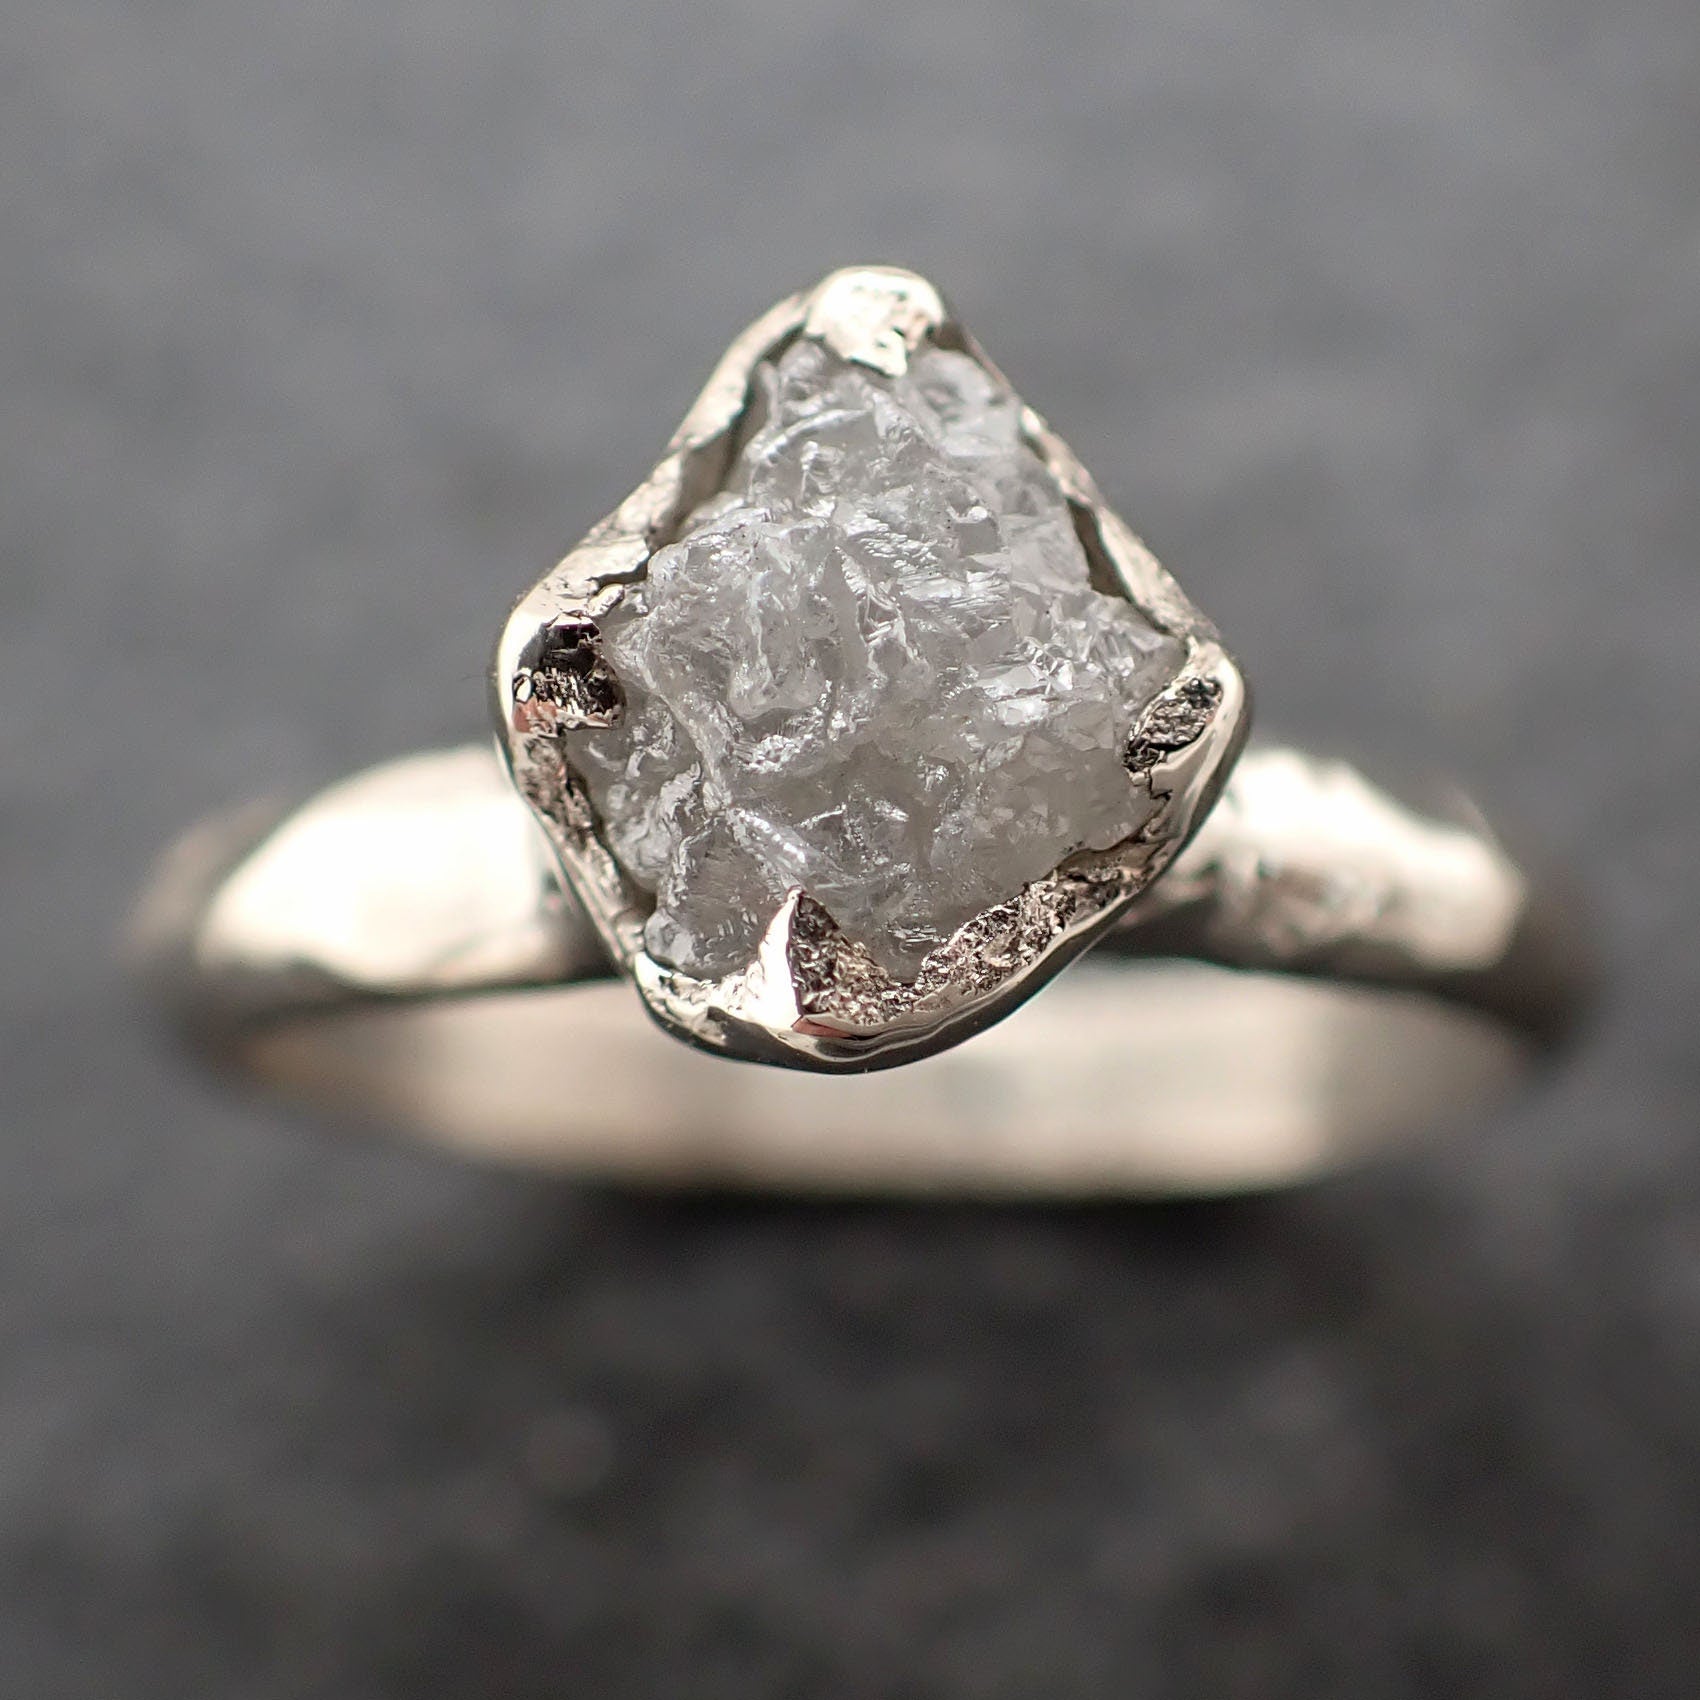 Raw White Diamond Solitaire Engagement Ring 14k White Gold Stacking Rough Diamond byAngeline 3141